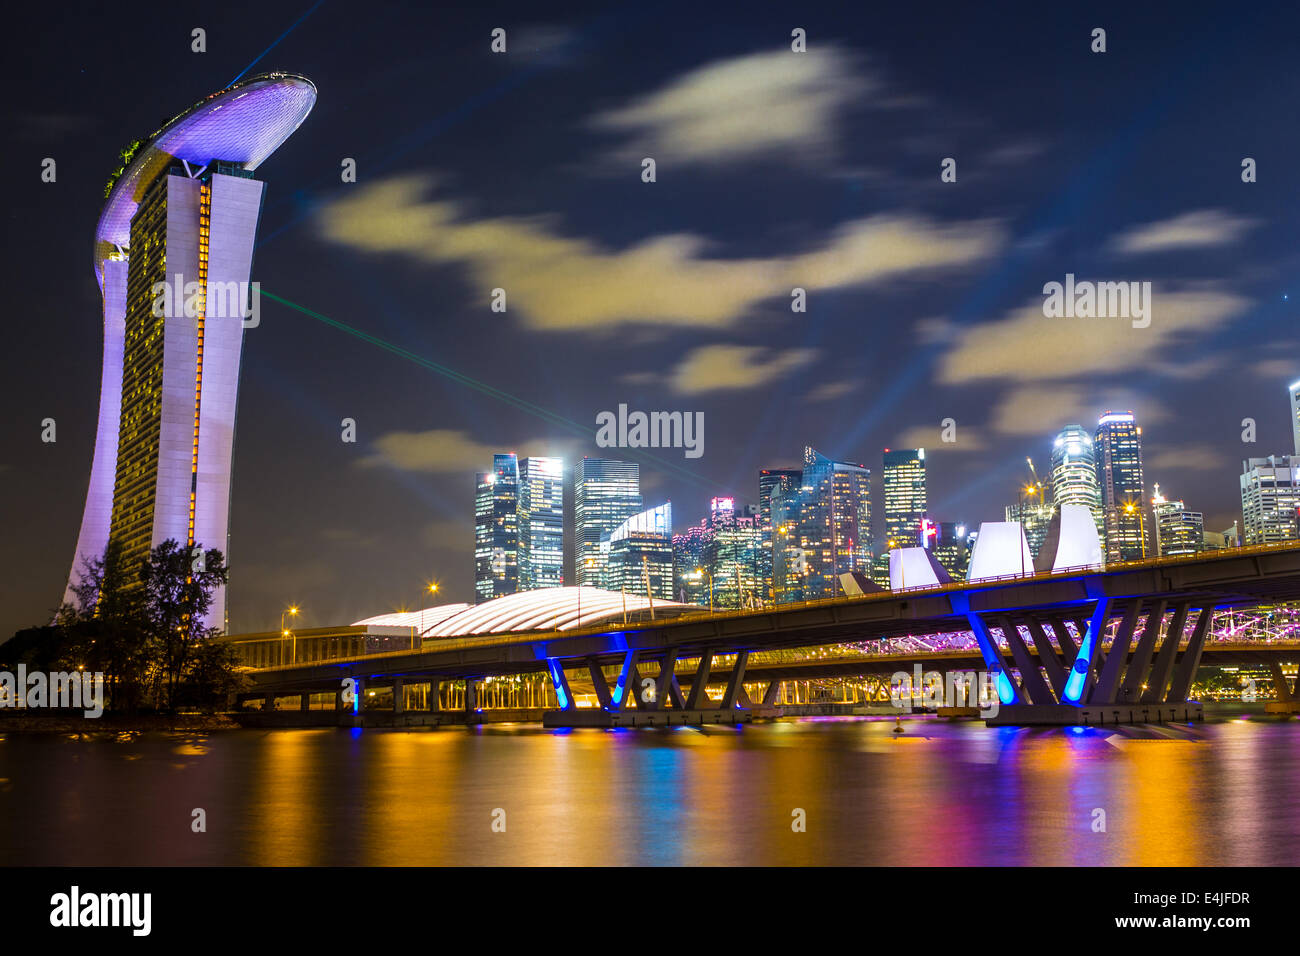 Marina Bay Sands Singapore light show Stock Photo